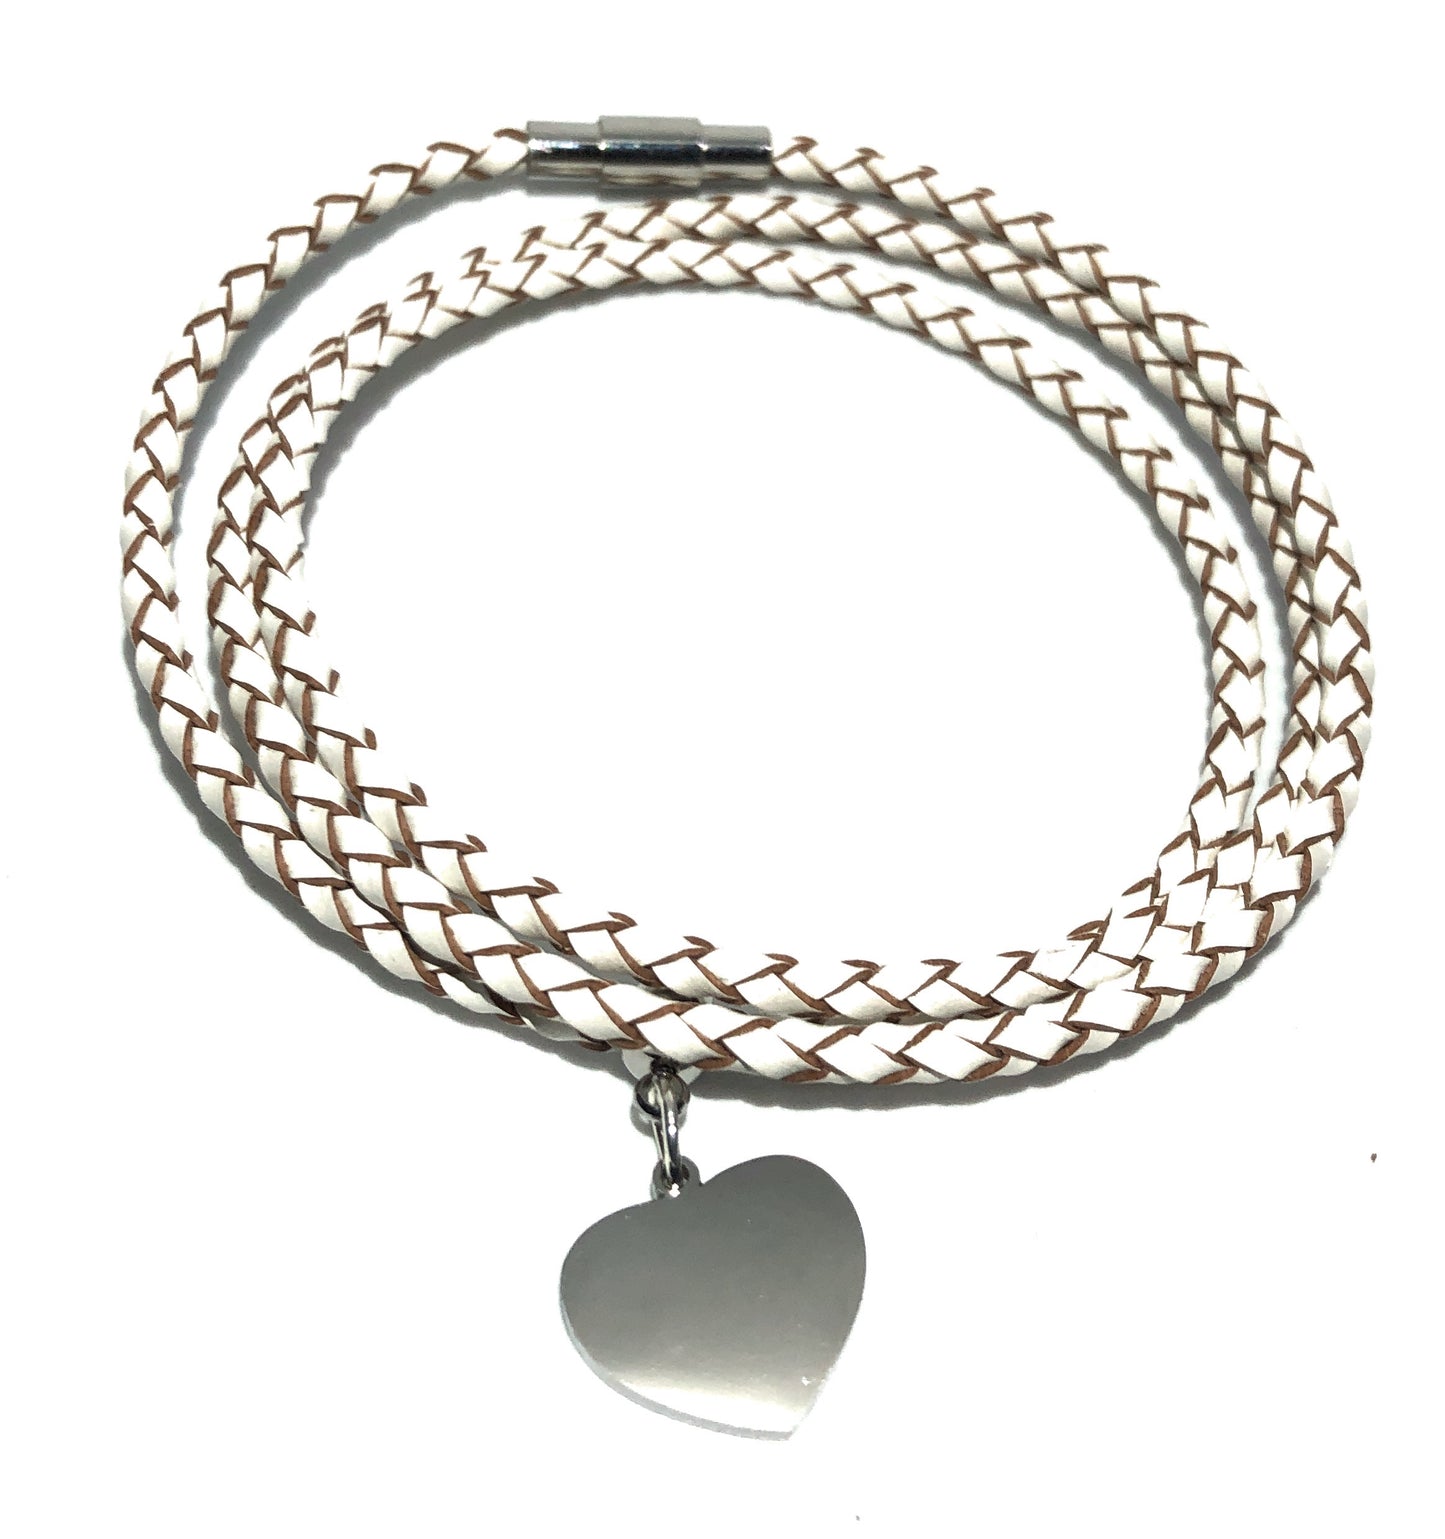 Leather Braided Heart Charm Bracelet